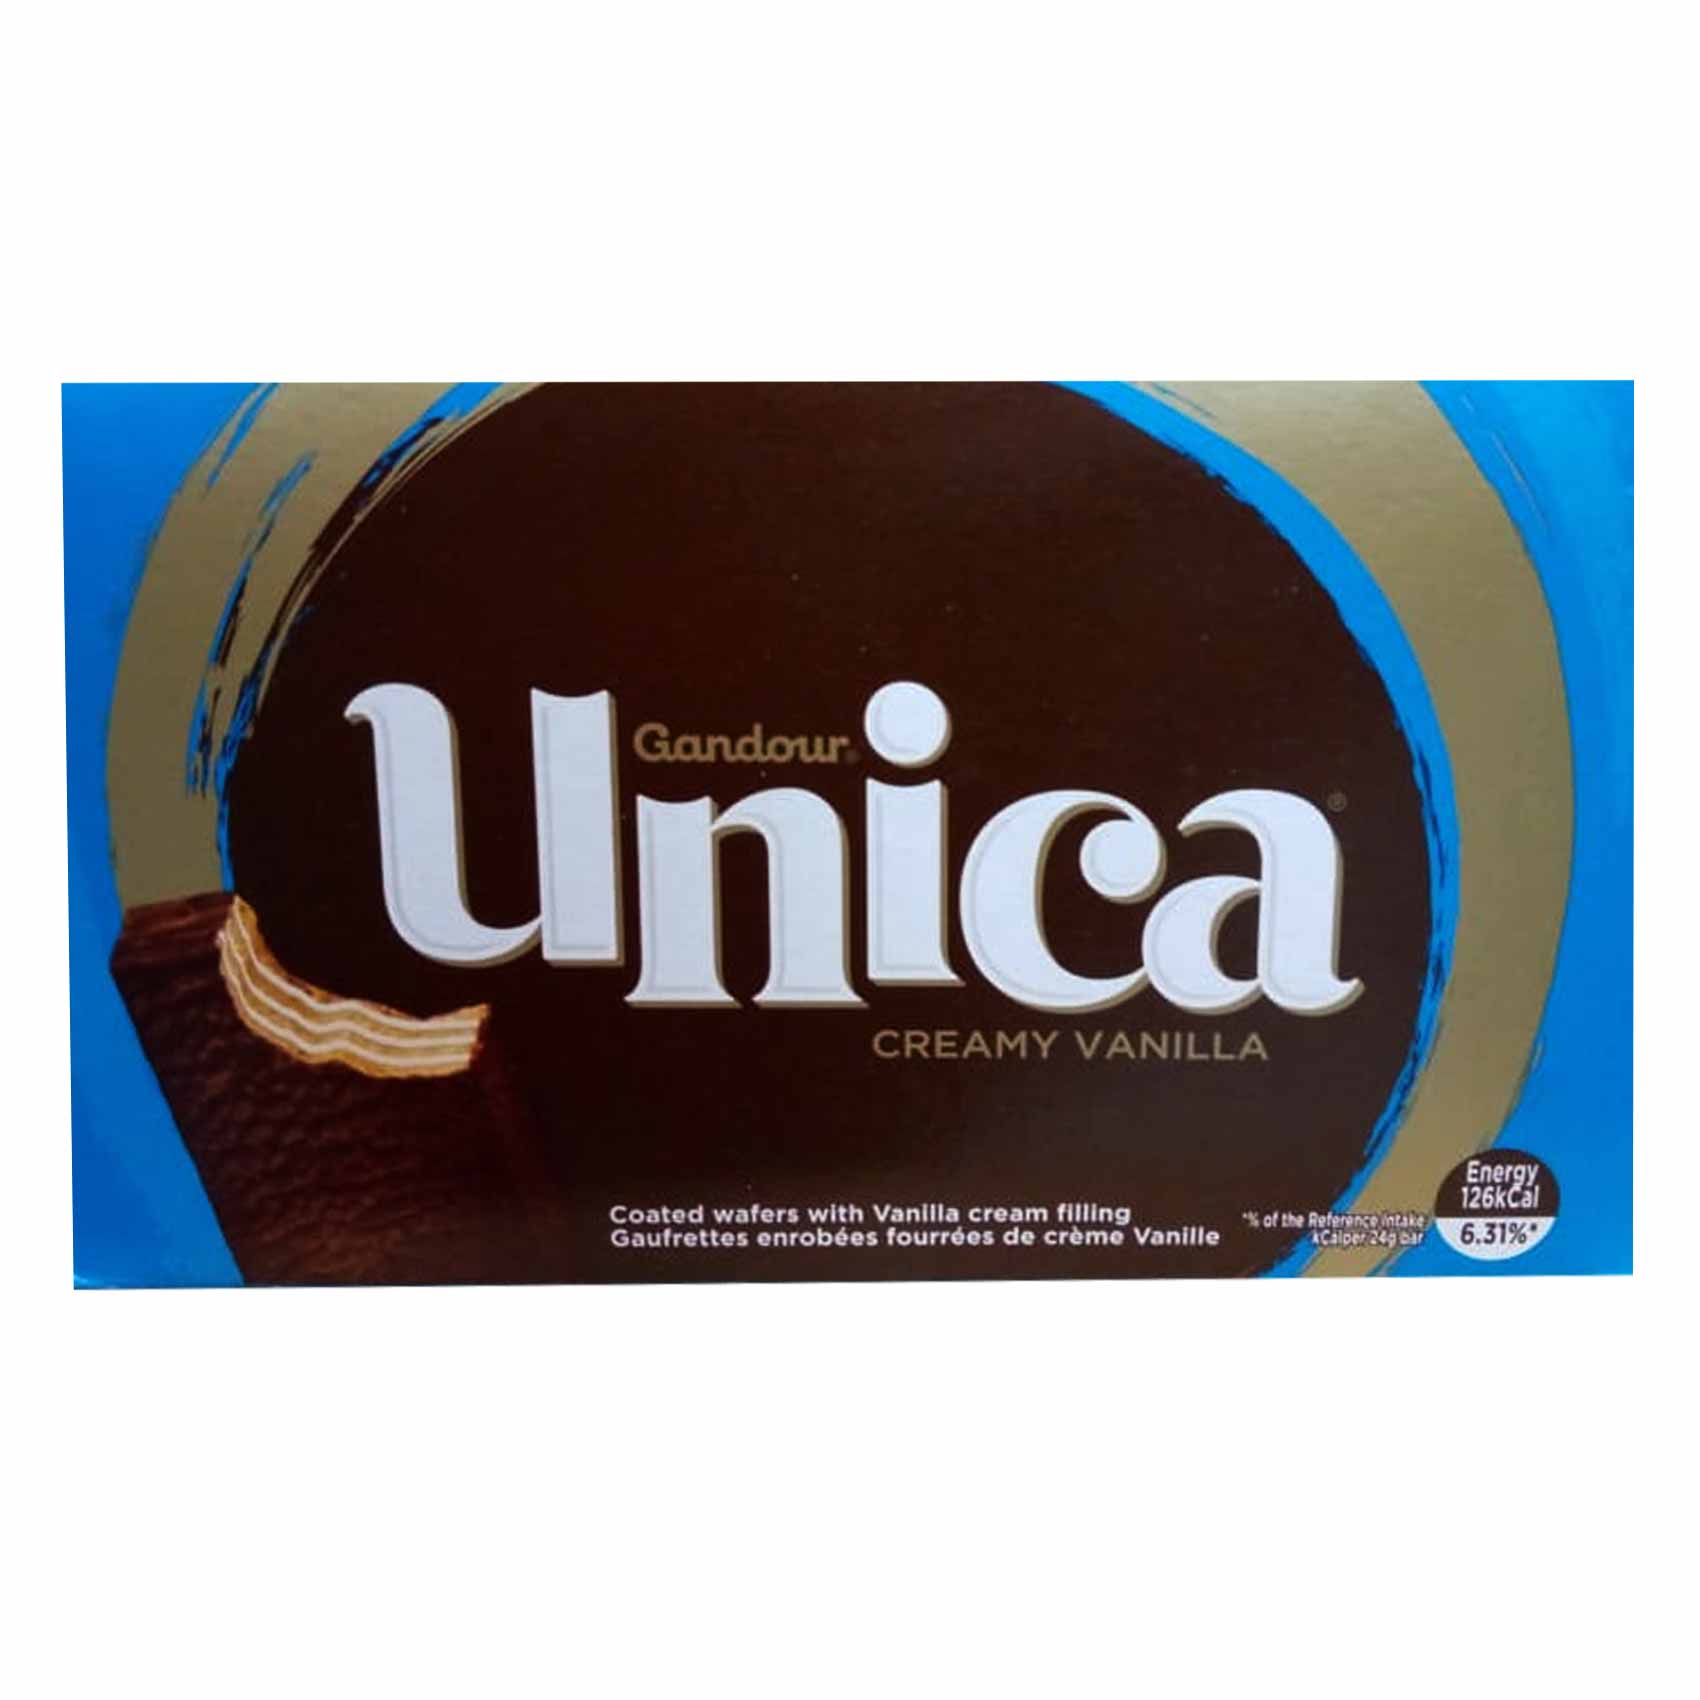 Gandour Unica Creamy Vanilla Wafer 24GR X Pack Of 24